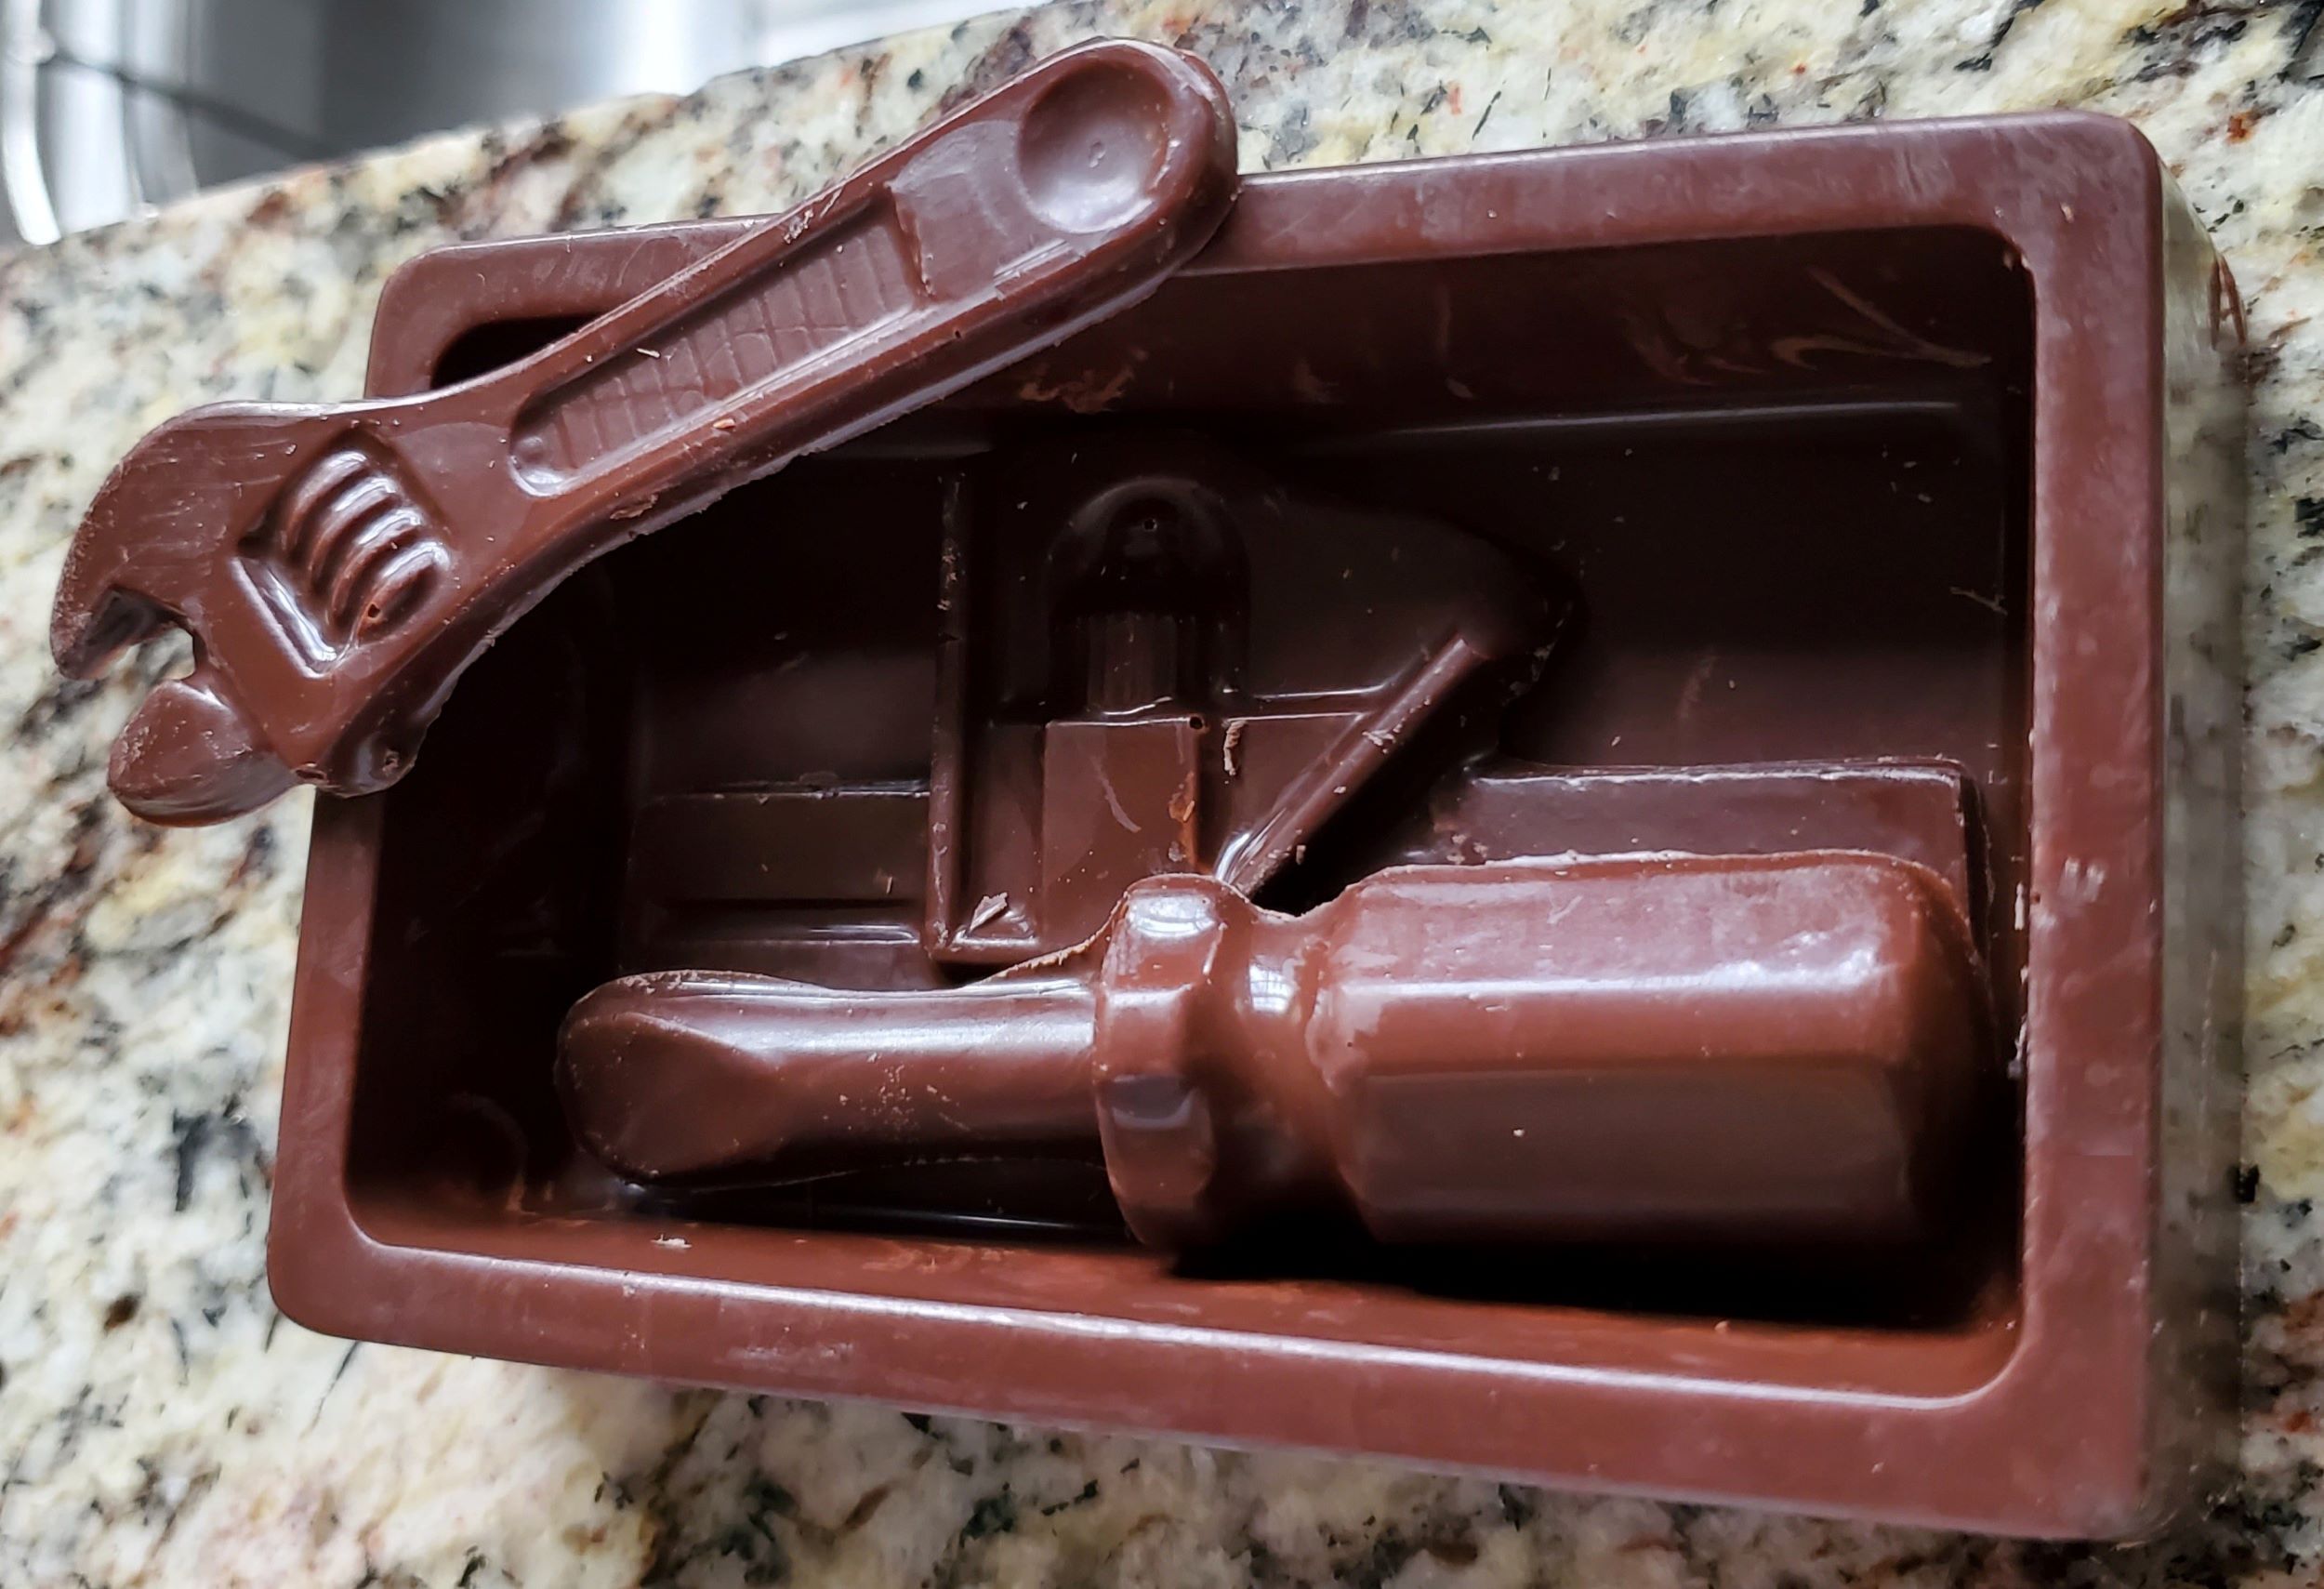 https://www.chocolategifts.com/wp-content/uploads/2019/08/tool-box-milk-bottom-with-tools-inside-3.jpg